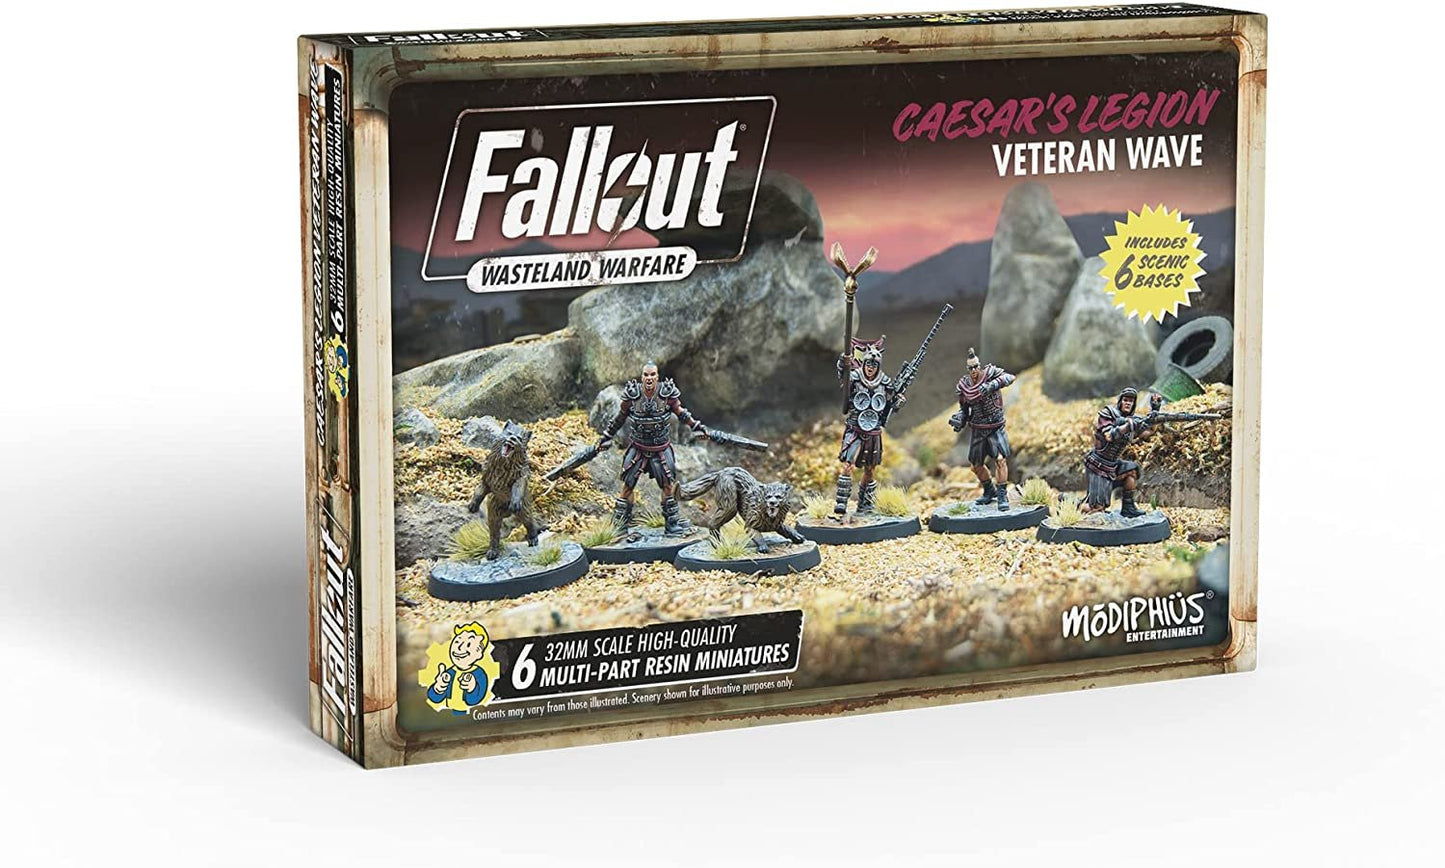 Fallout Wasteland Warfare: Caesar's Legion Veteran Wave